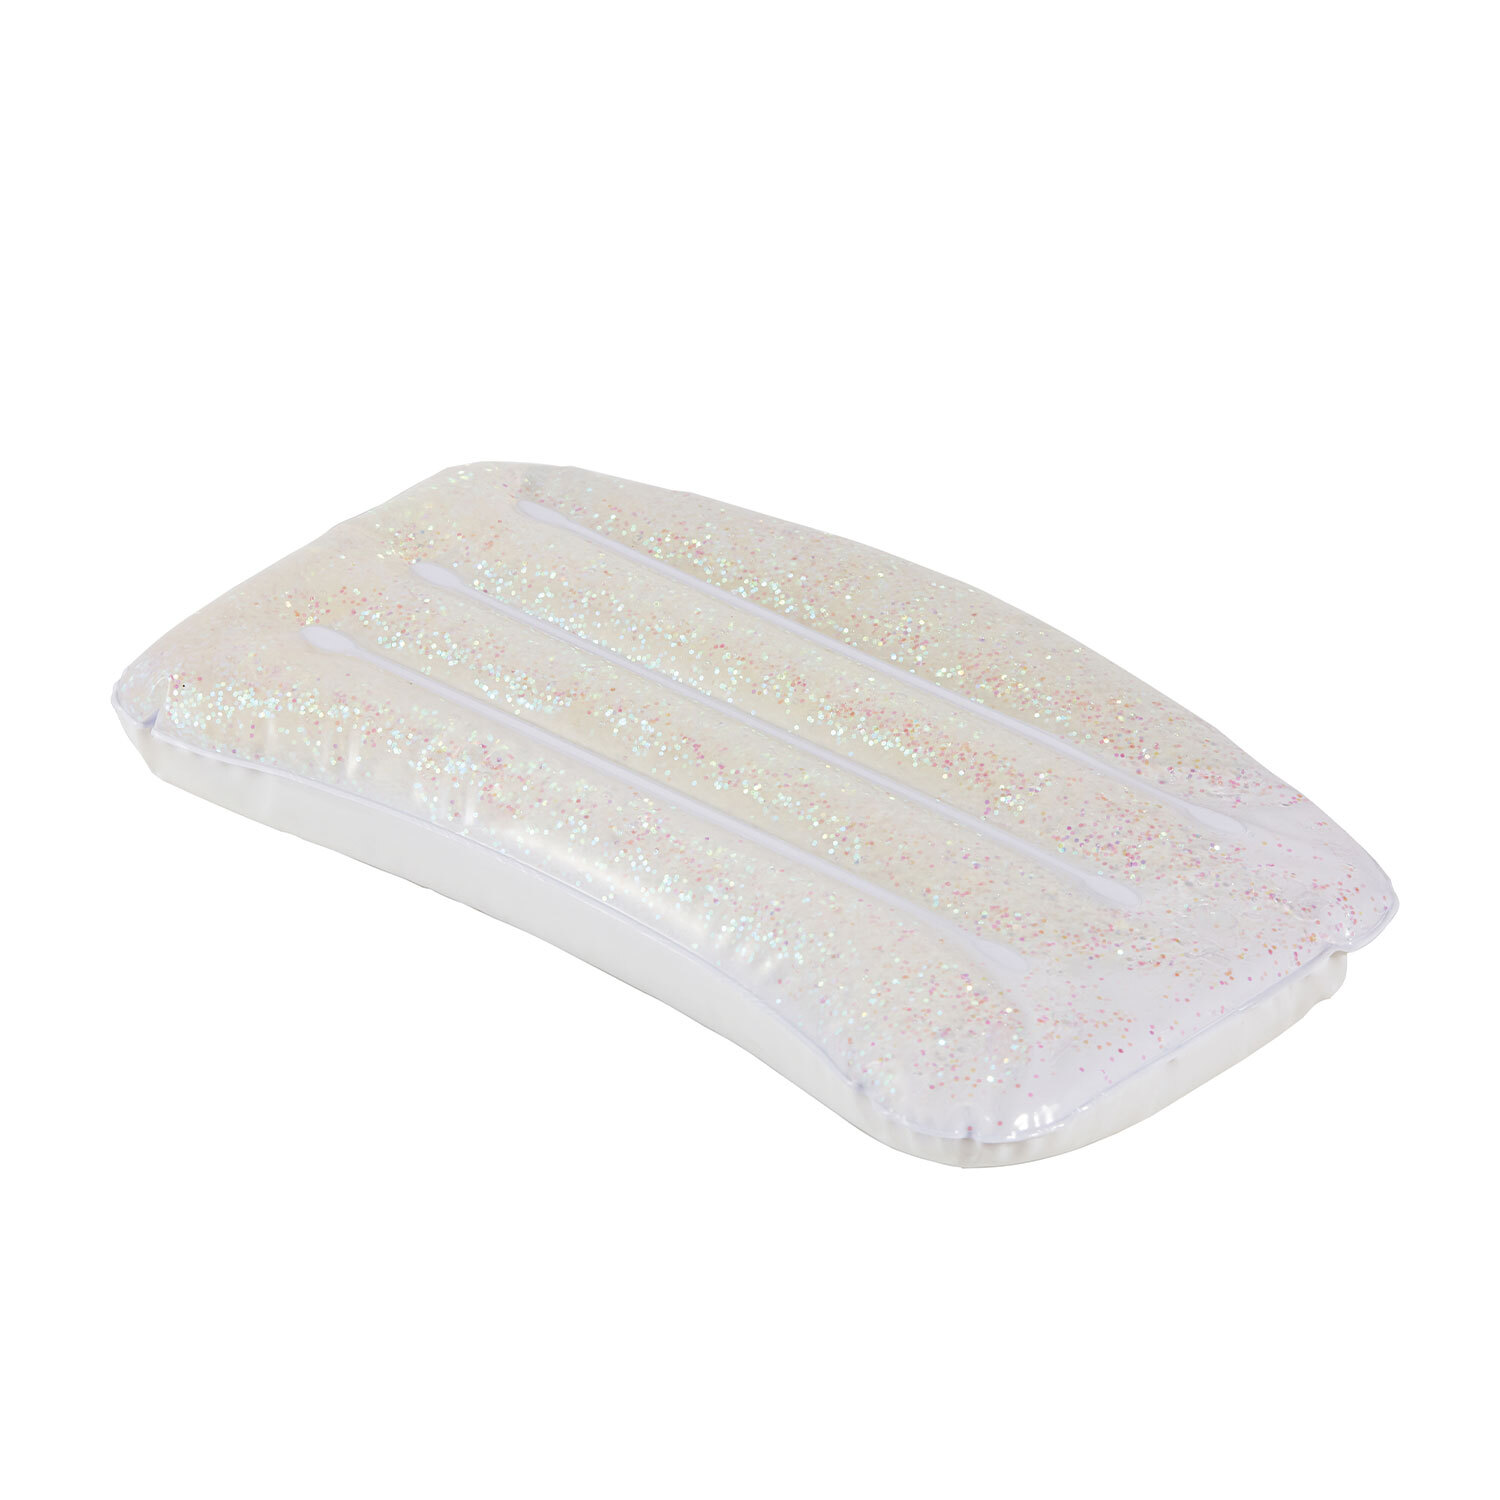 Iridescent Glitter Bath Pillow - White Image